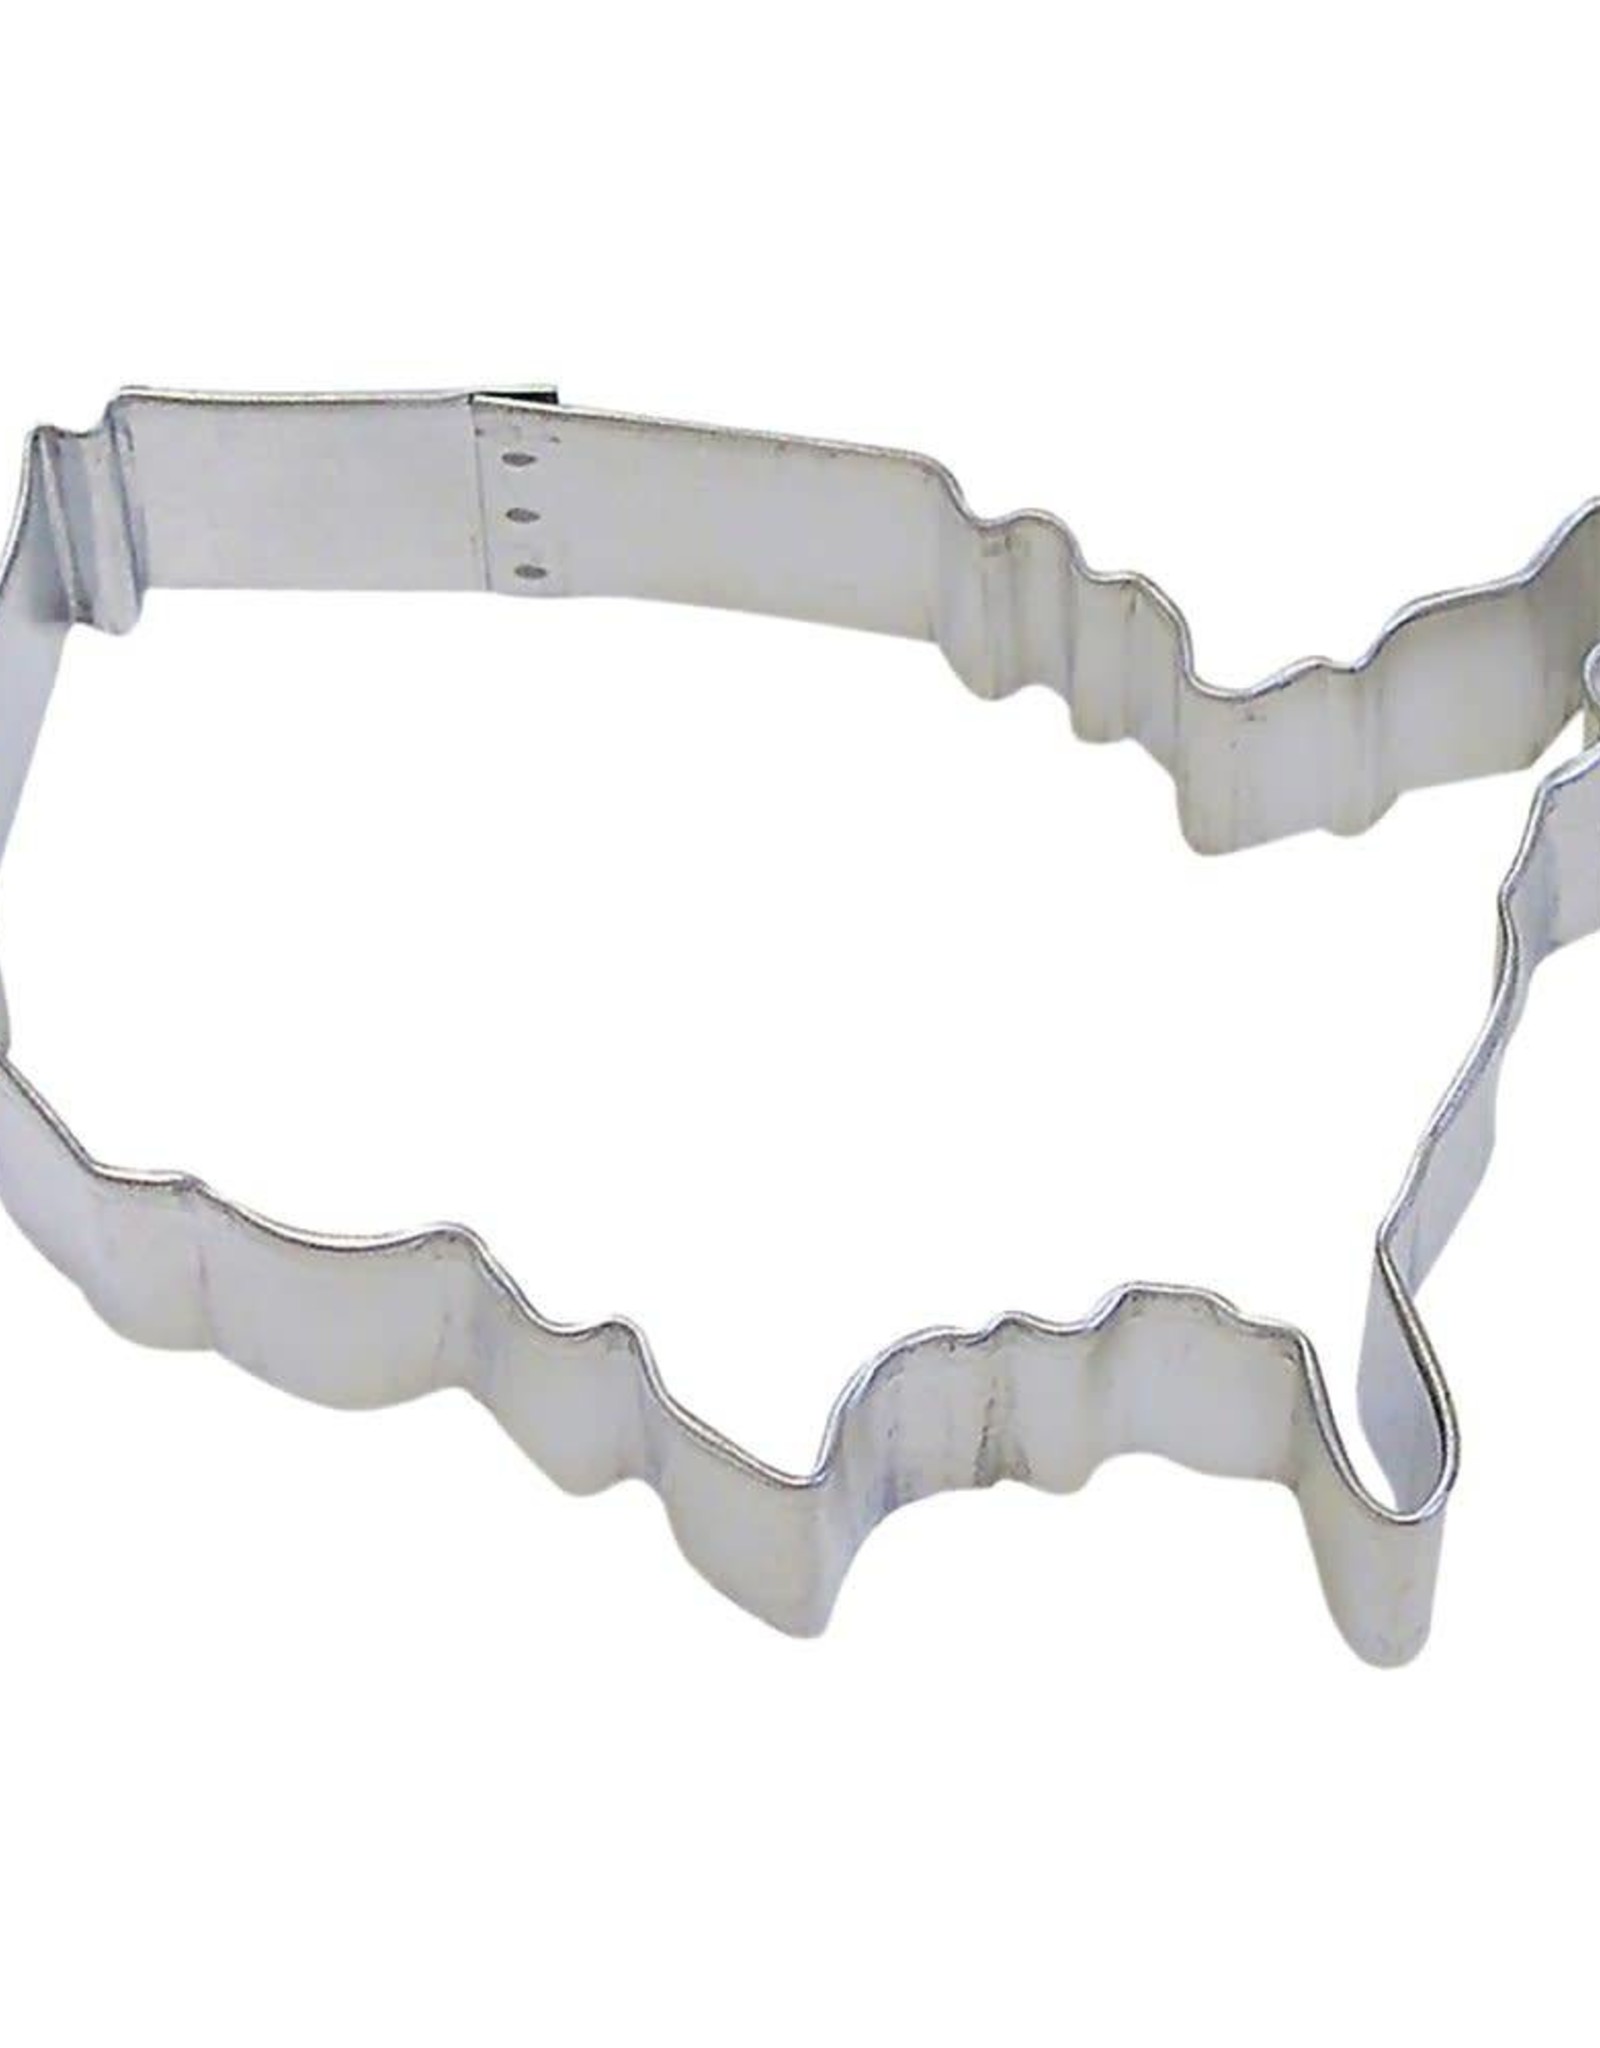 USA Map Cookie Cutter (4")